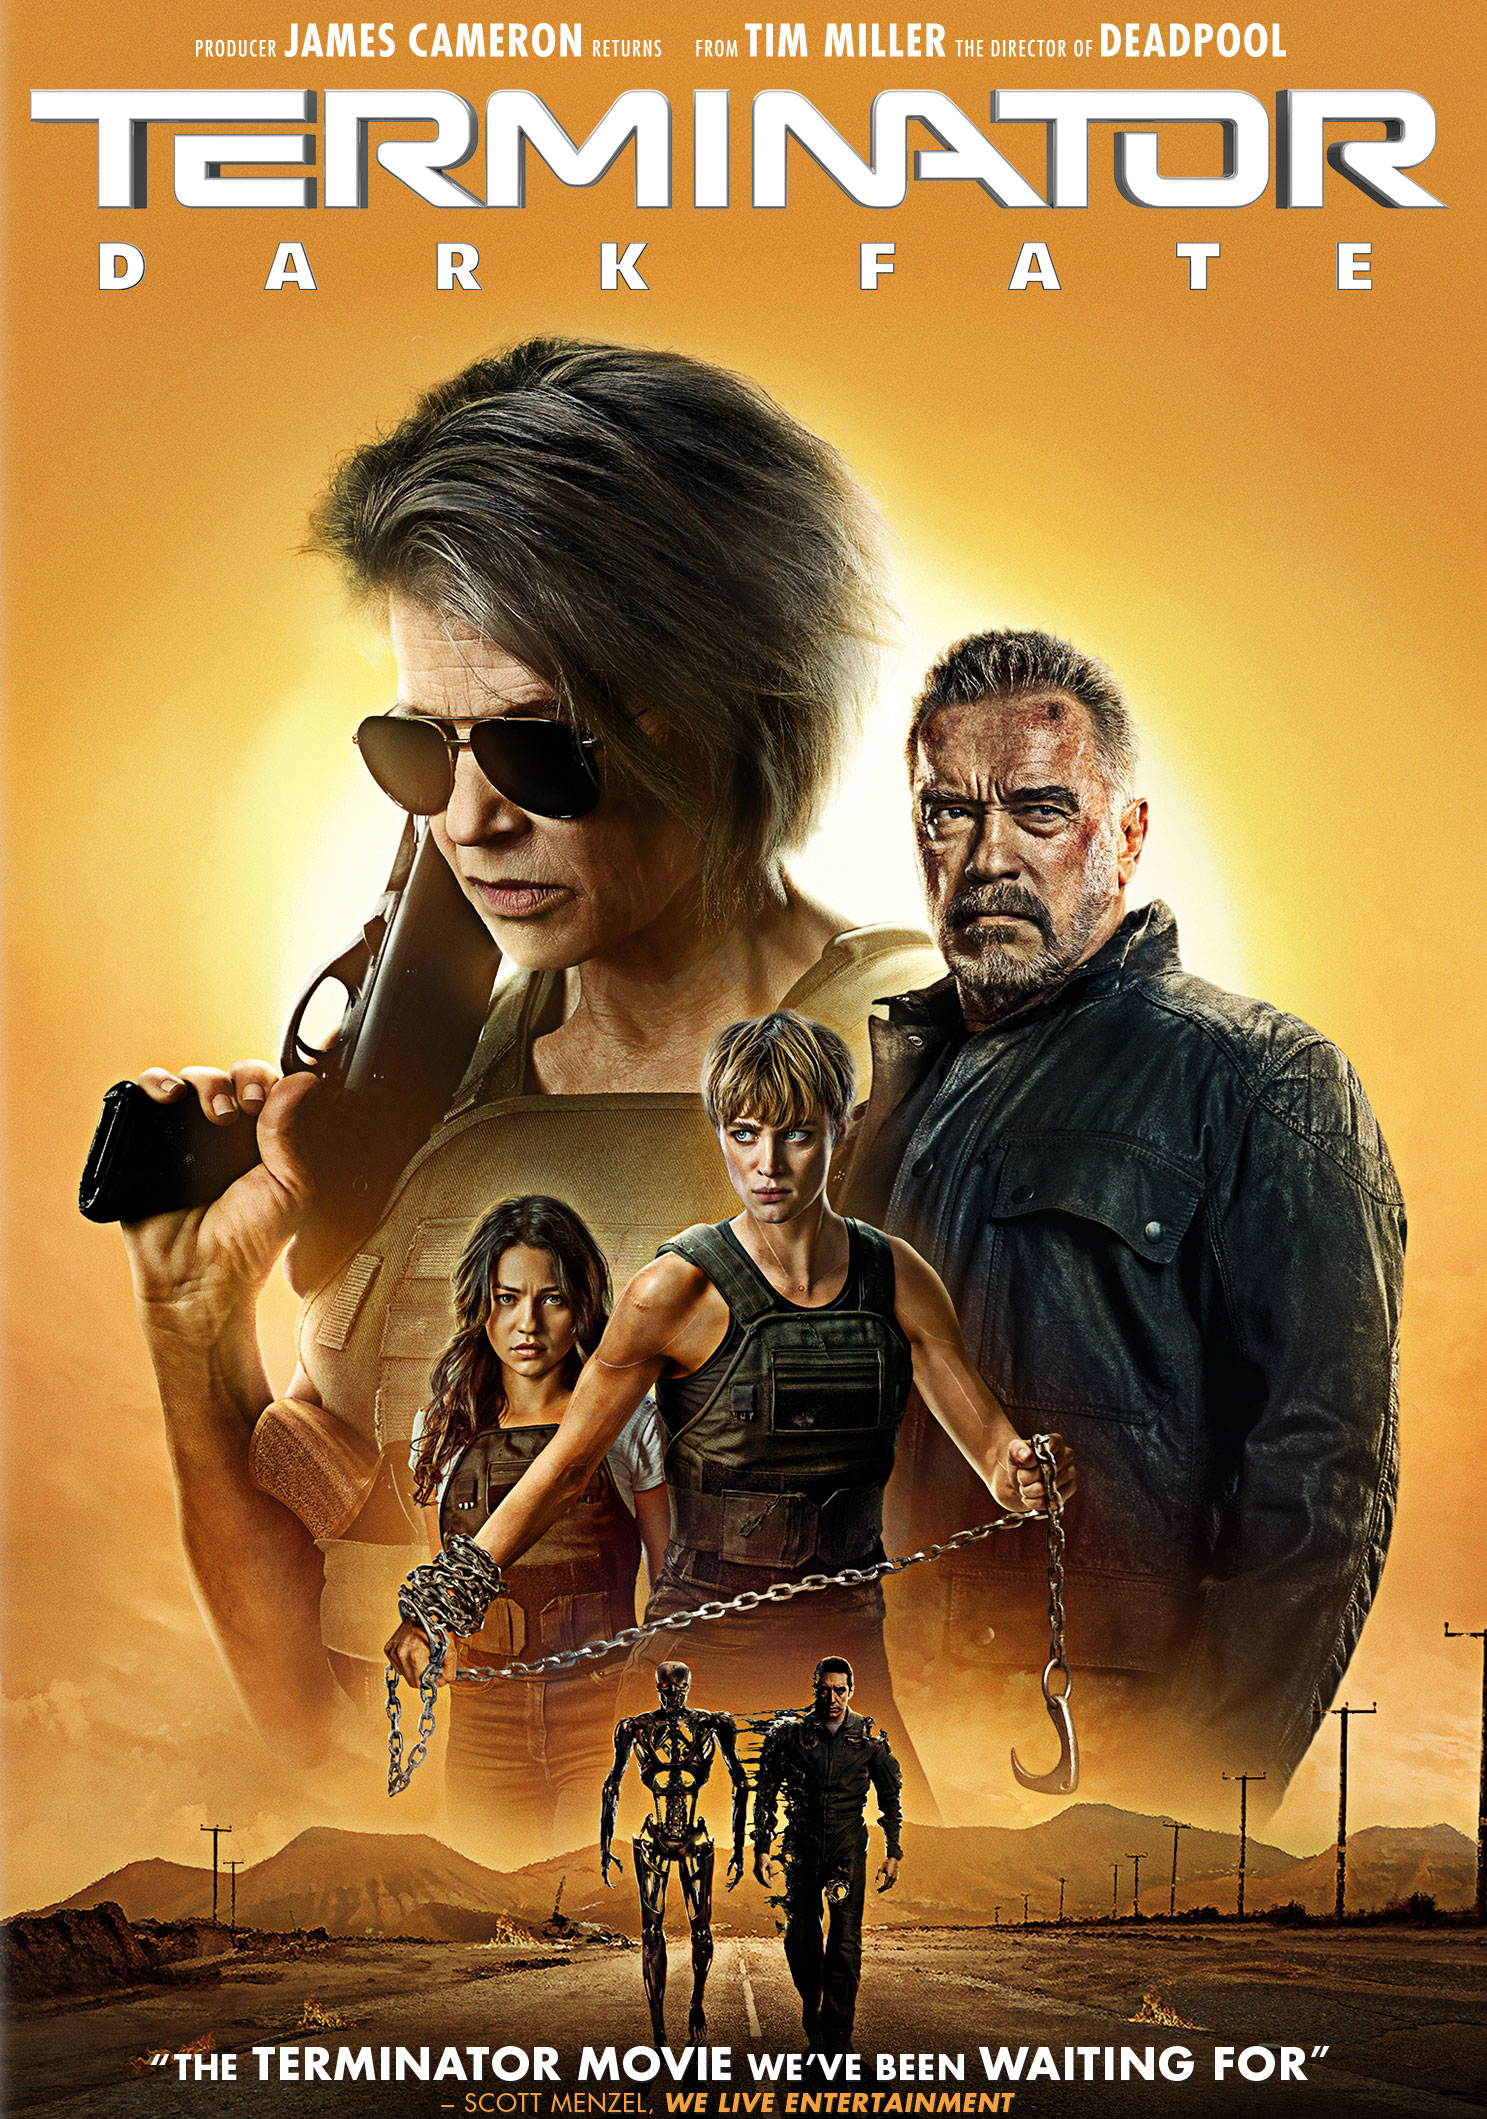 Stiahni si HD Filmy Terminator: Temny osud/Terminator: Dark Fate (2019)(CZ/ENG) [1080p] = CSFD 67%